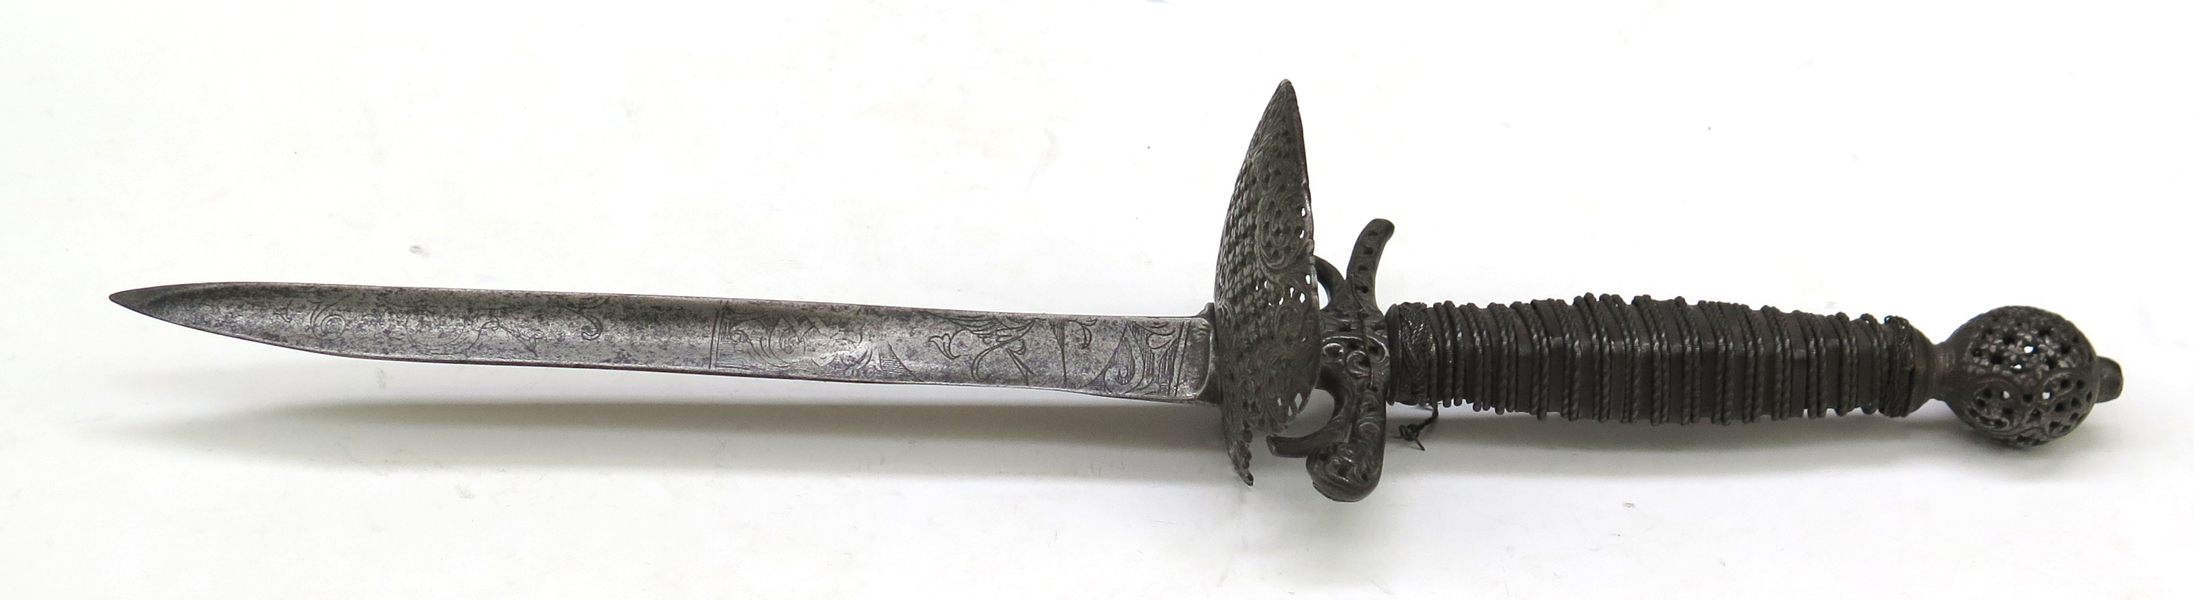 Dolk, stål, (ursprungligen värja) Frankrike 1700-tal, etsad stukatklinga, längd 36 cm, skador_32168a_8dbb9dbd34494df_lg.jpeg